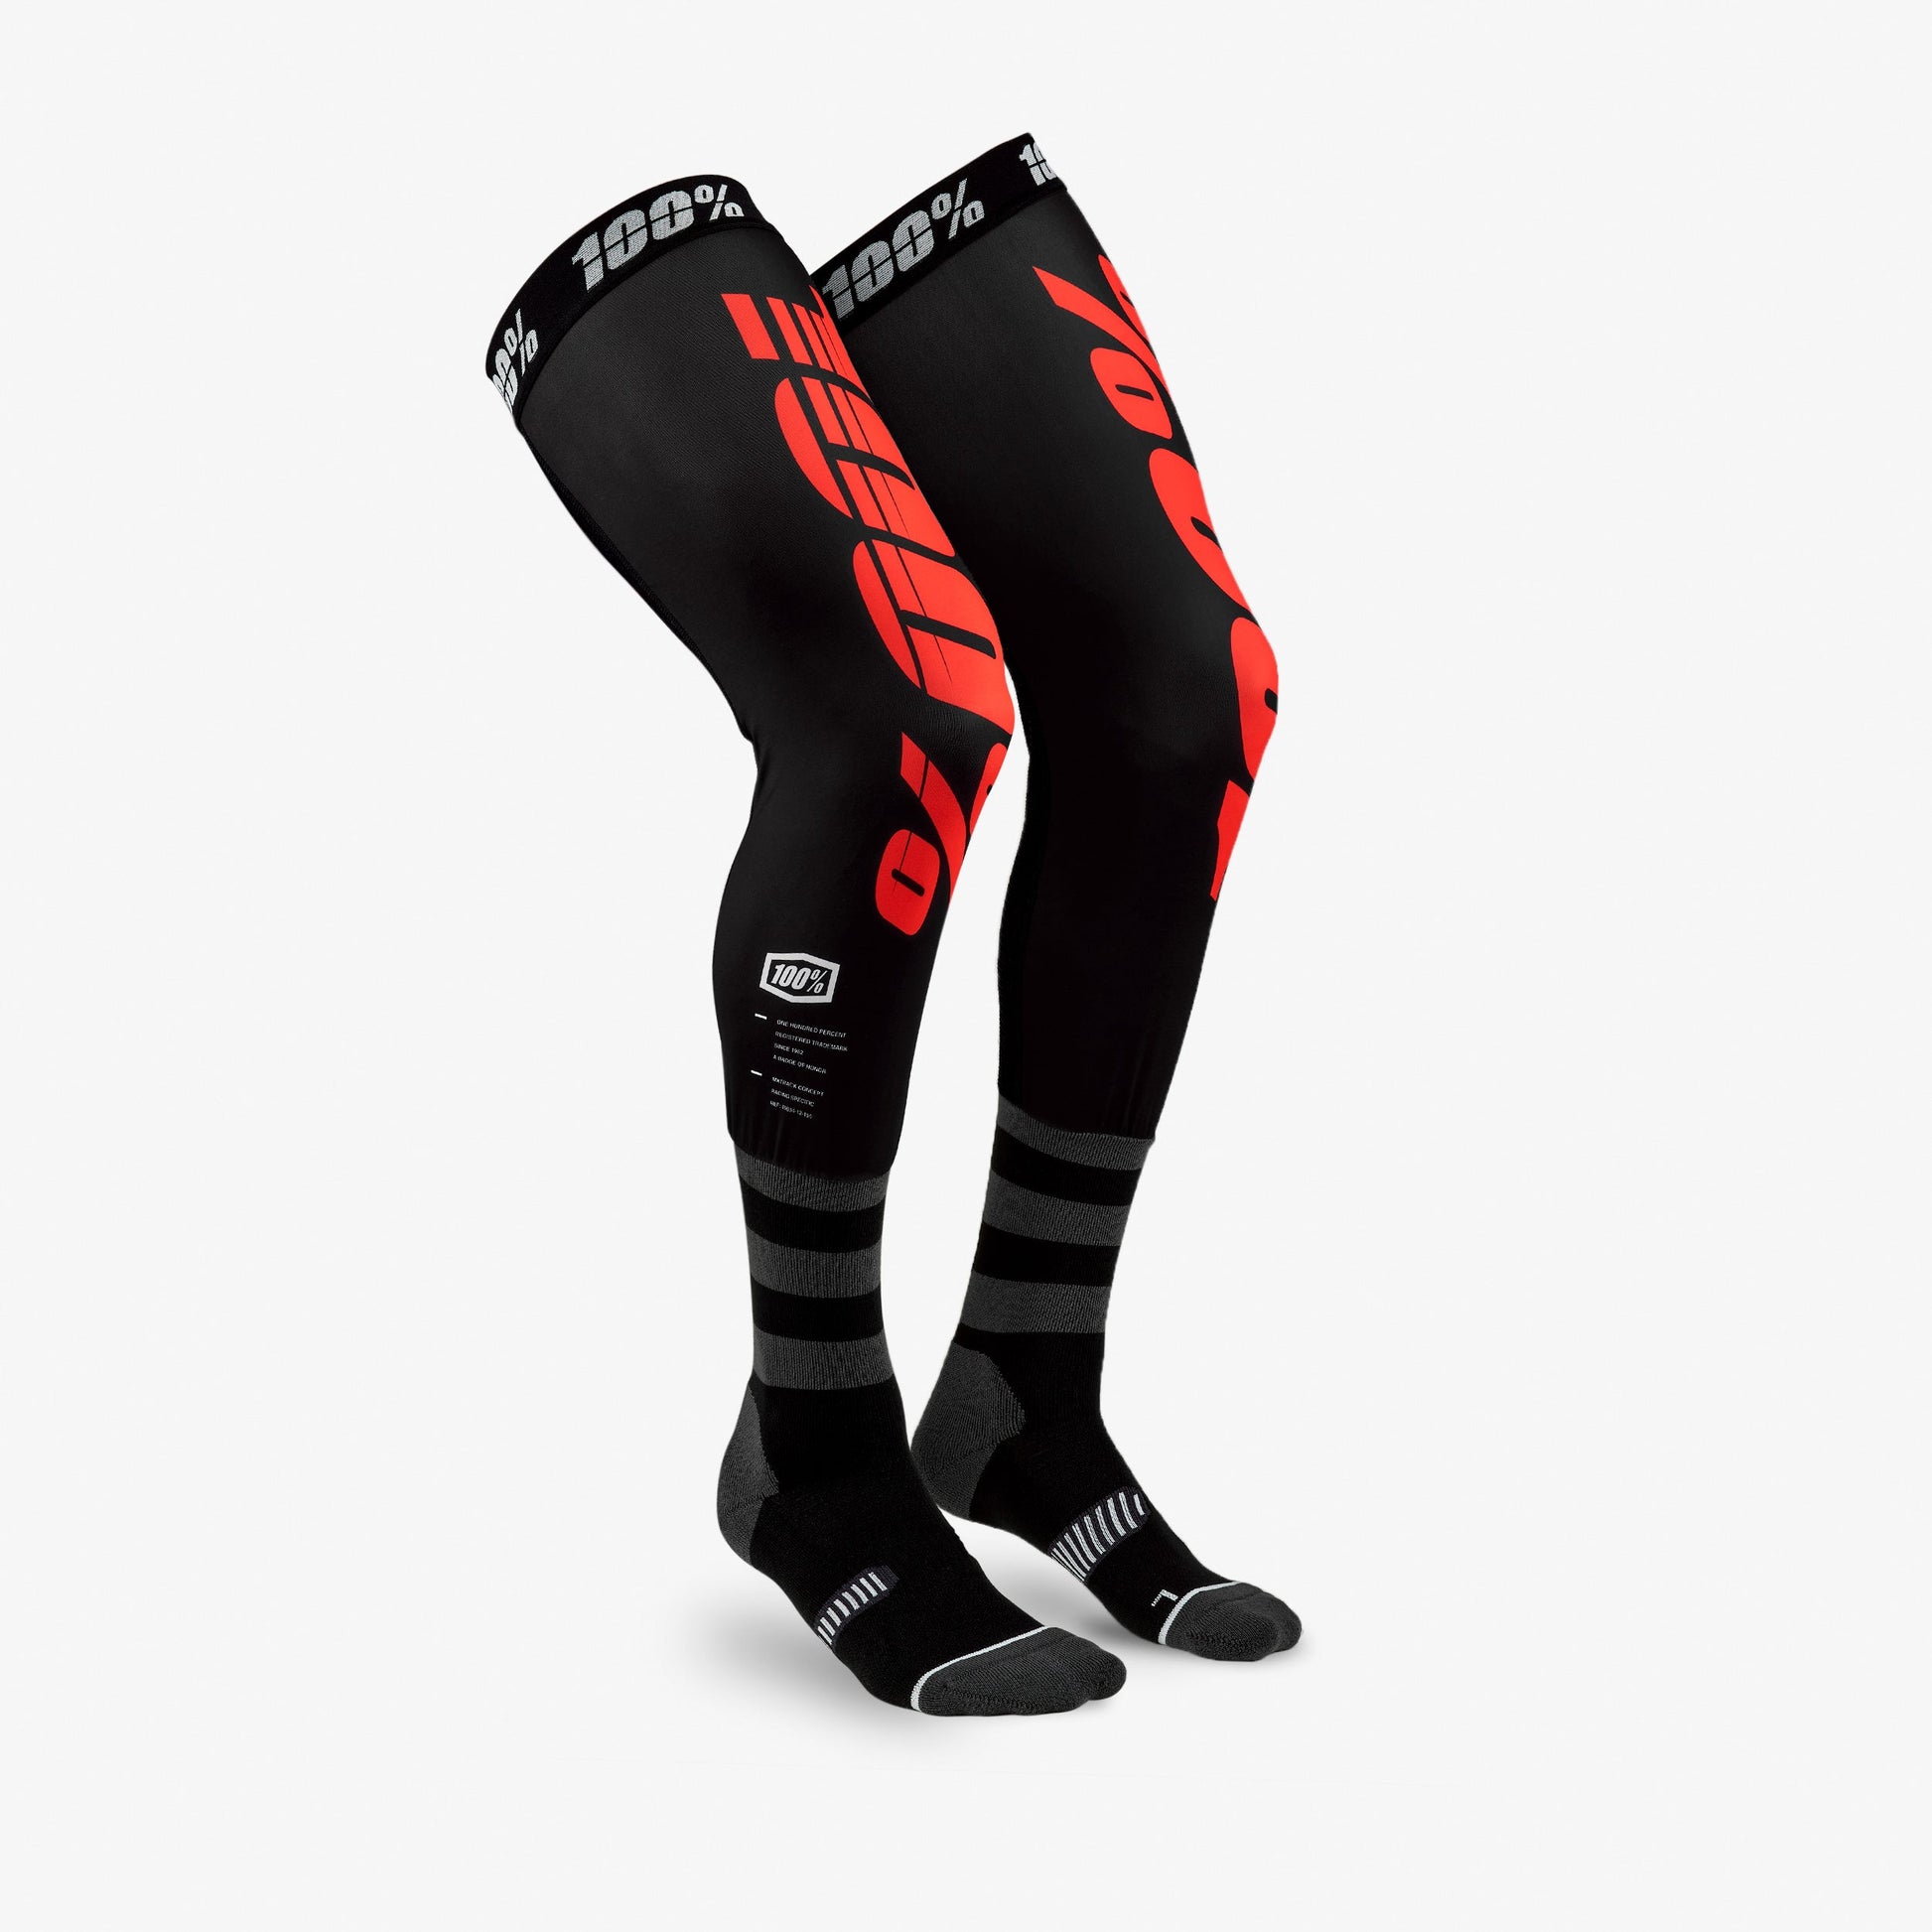 REV Knee Brace Performance Moto Socks Black/Red – 100%